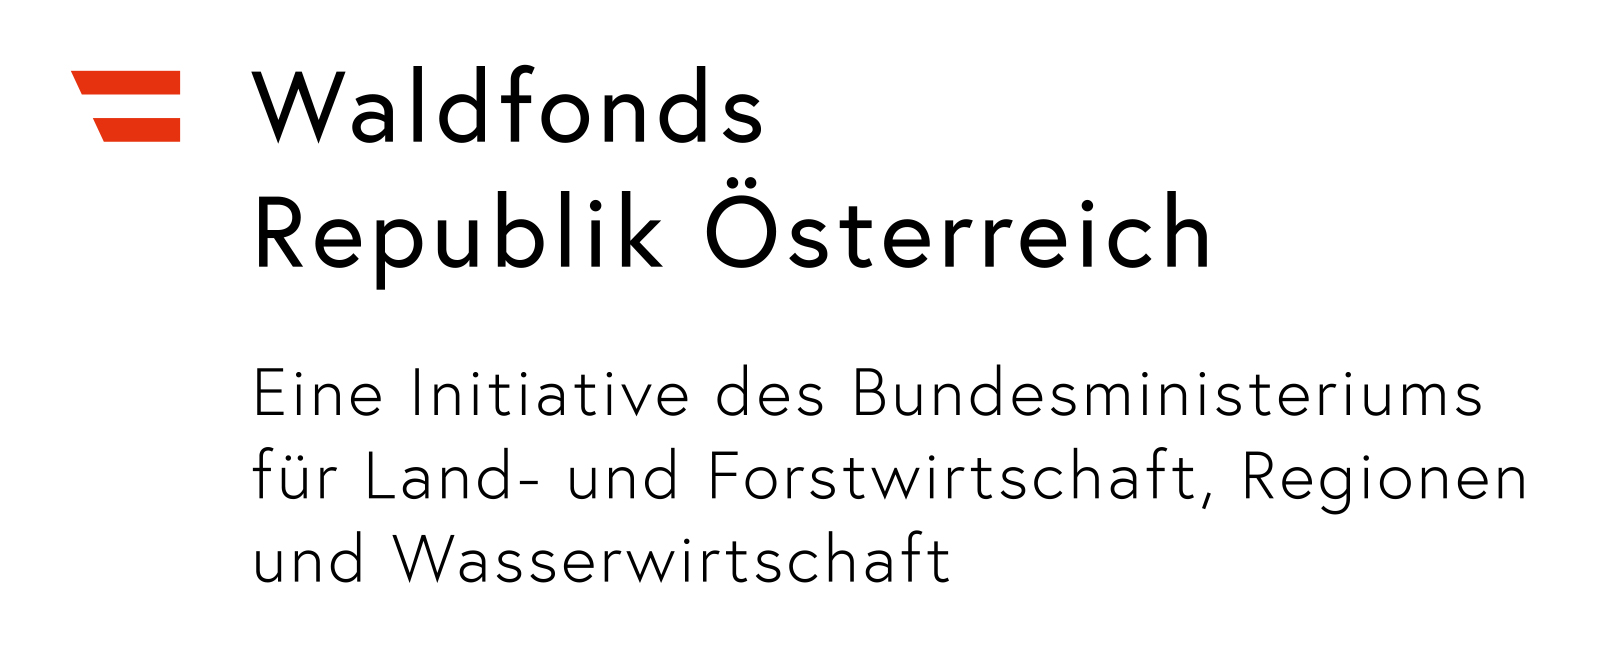 Waldfonds-Republik-Oesterreich_Logo